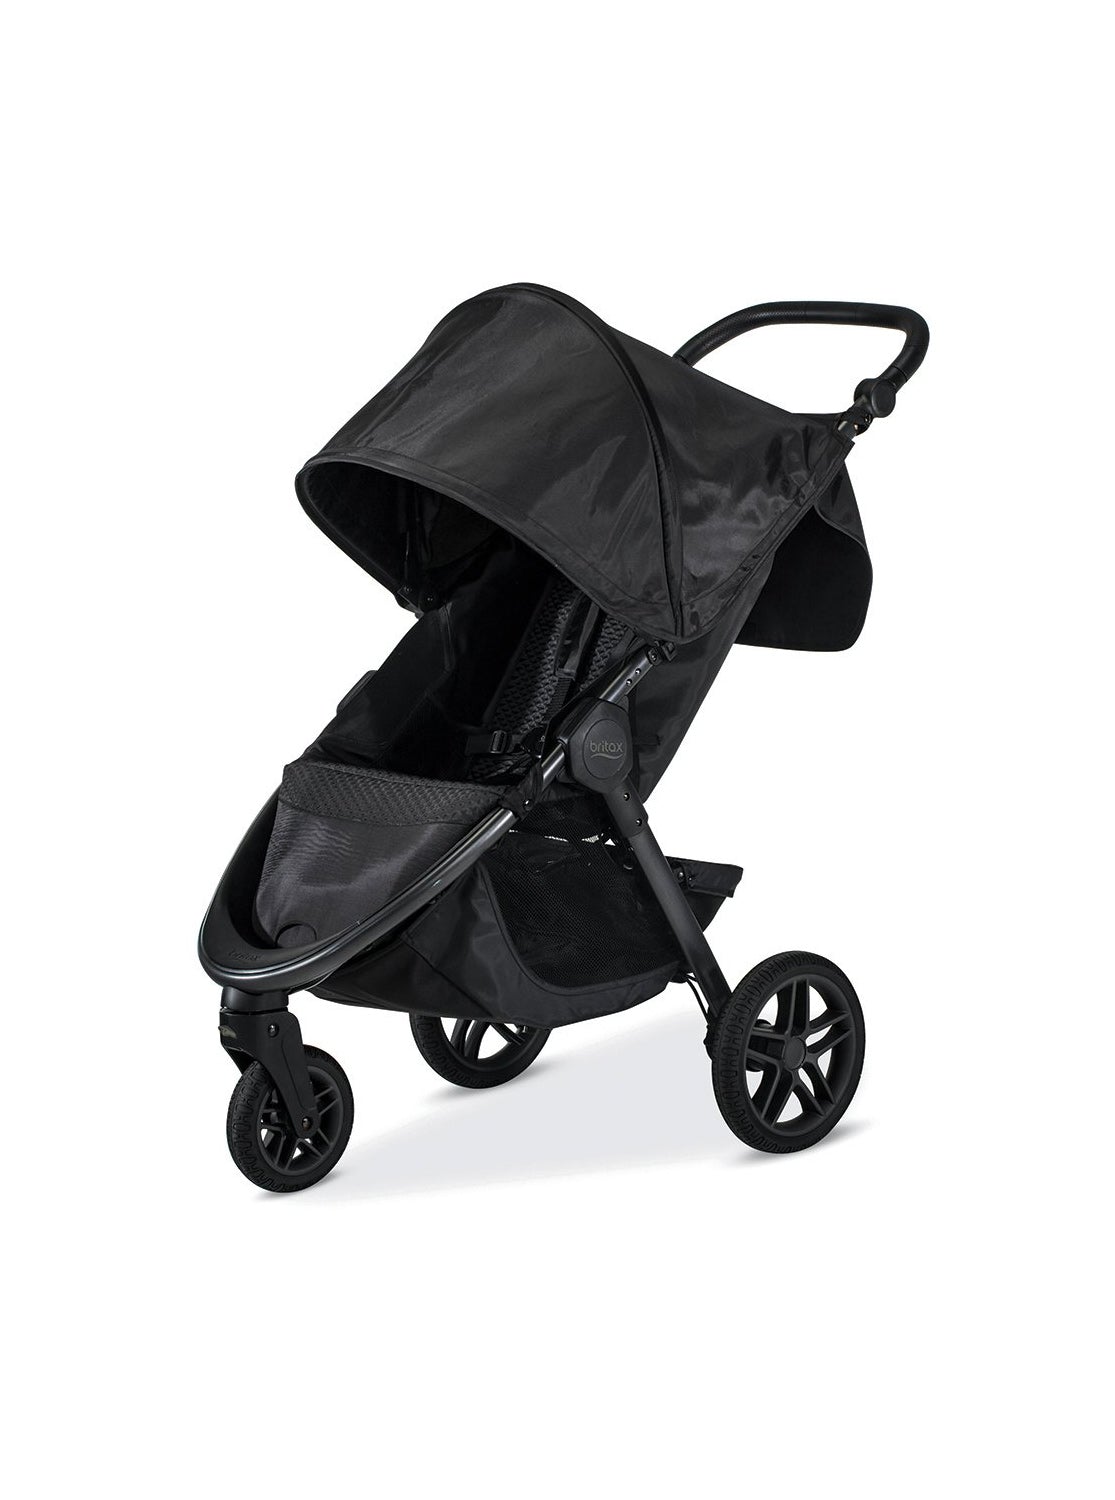 Britax B-Free Stroller - ANB Baby -3-Wheel Stroller